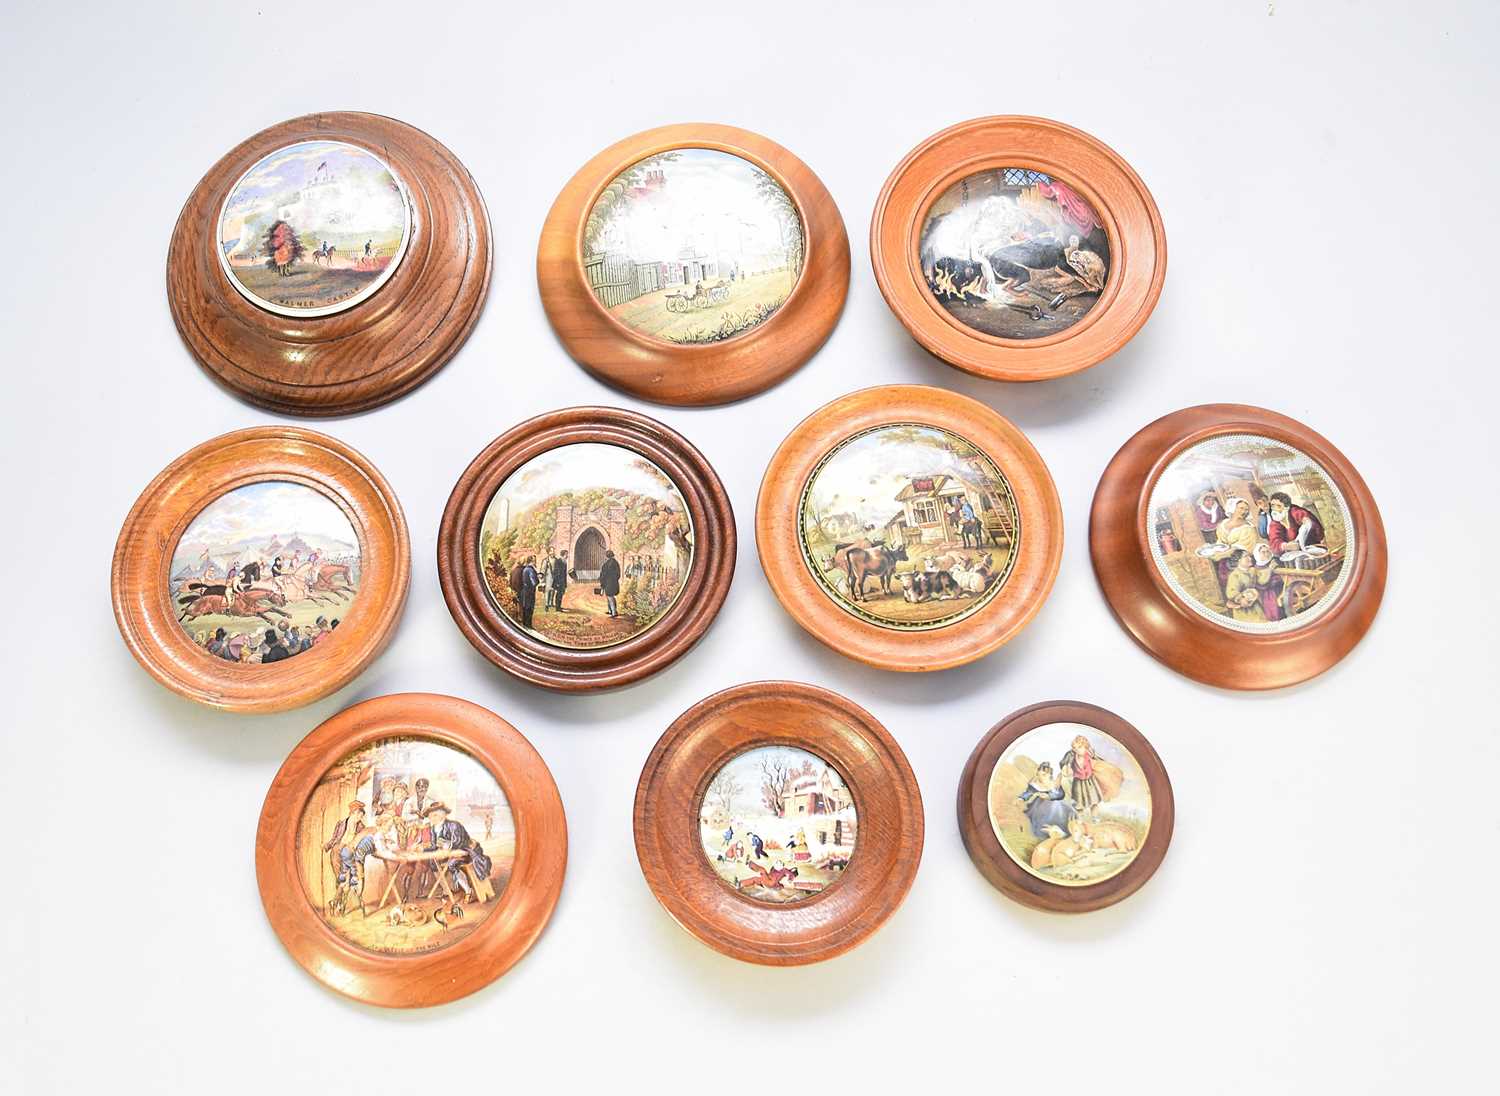 A group of framed prattware pot lids